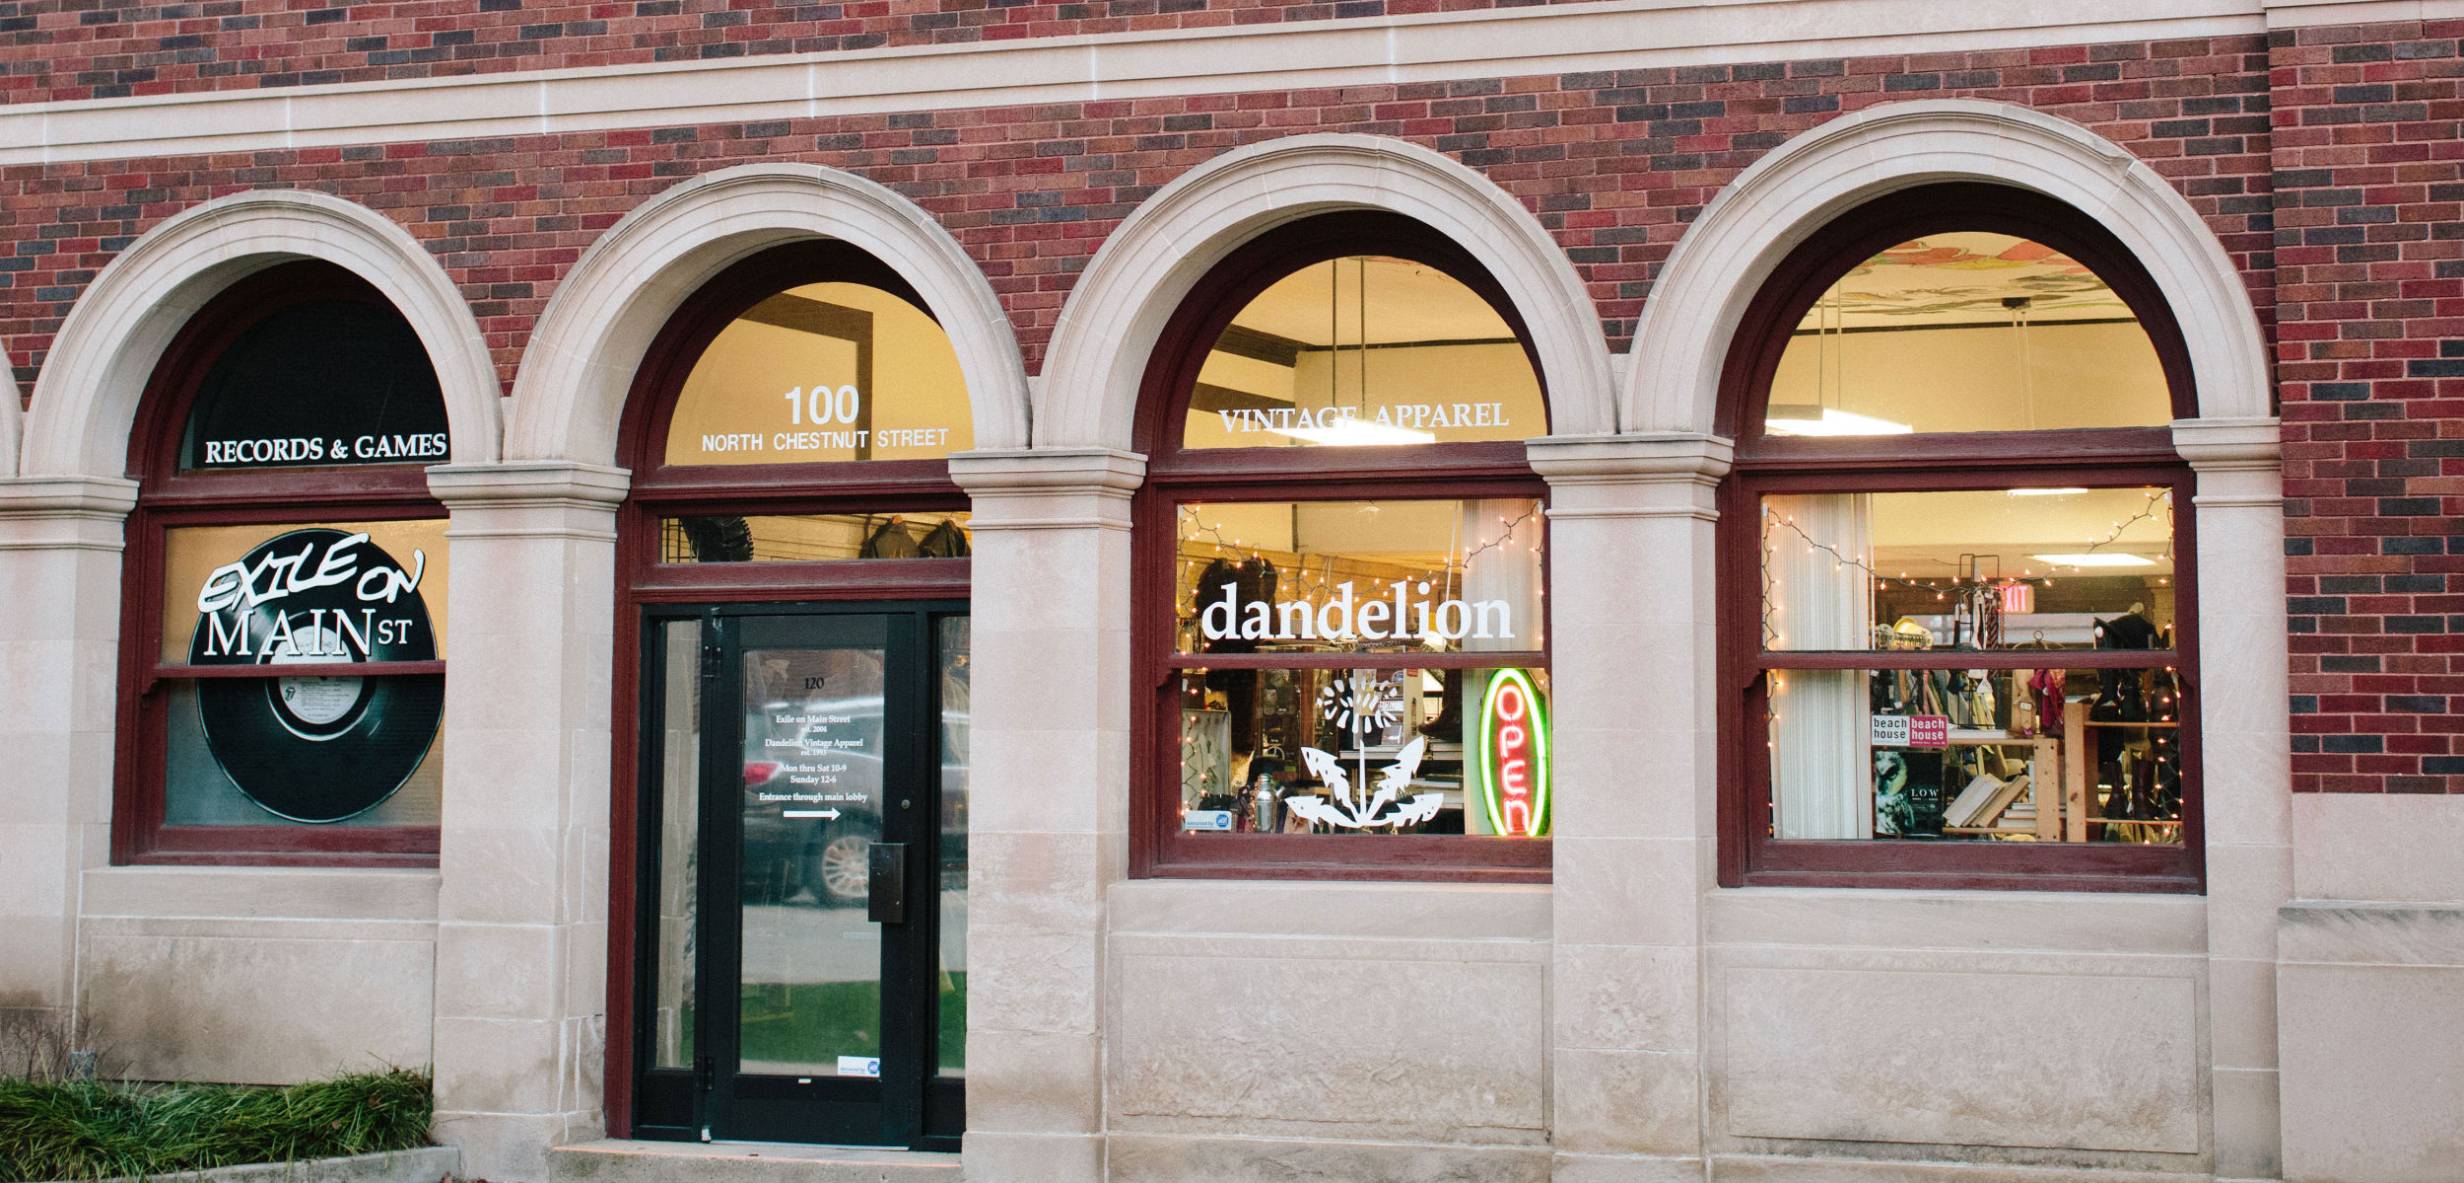 Dandelion is closing permanently